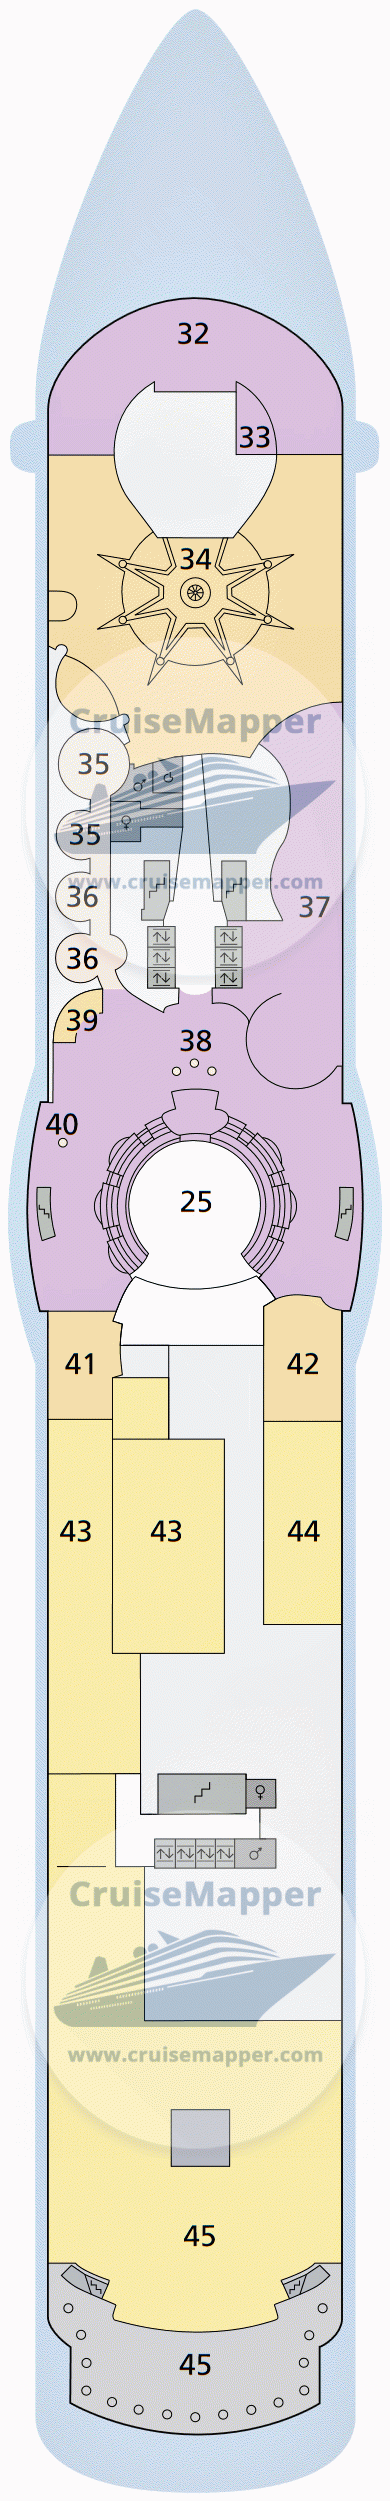 AIDAsol Deck 10 - Casino-Lounge